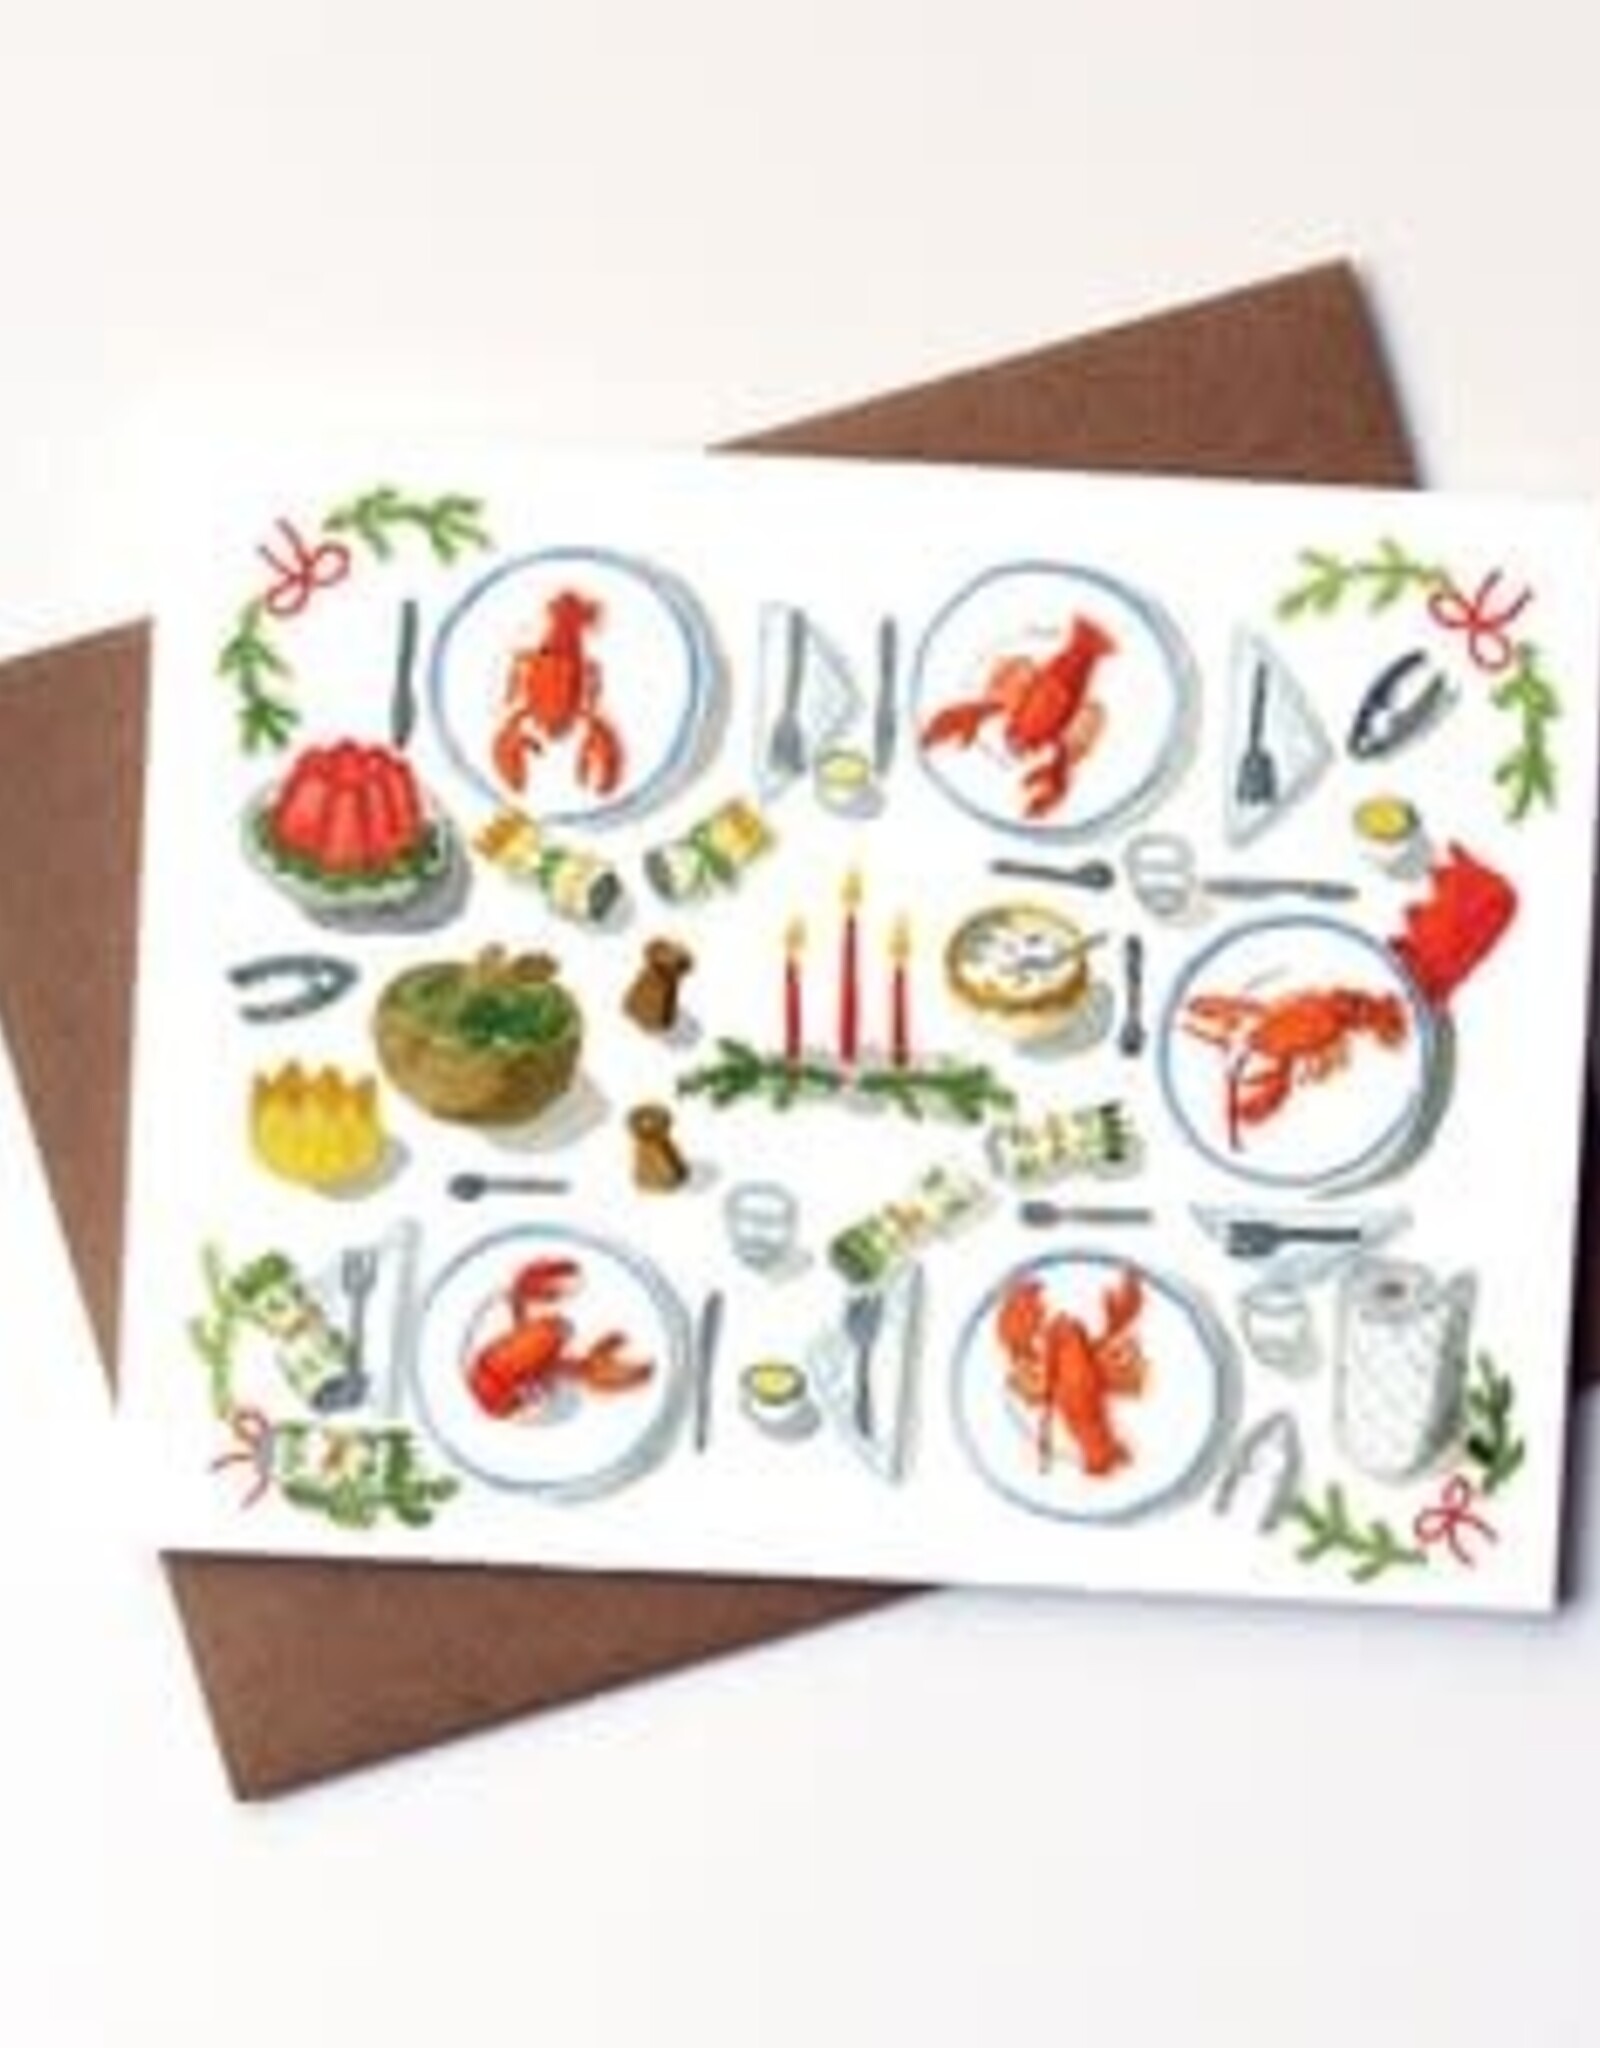 Kat Frick Miller - Holiday Card / Christmas Dinner Lobster, 4.25 x 5.5"